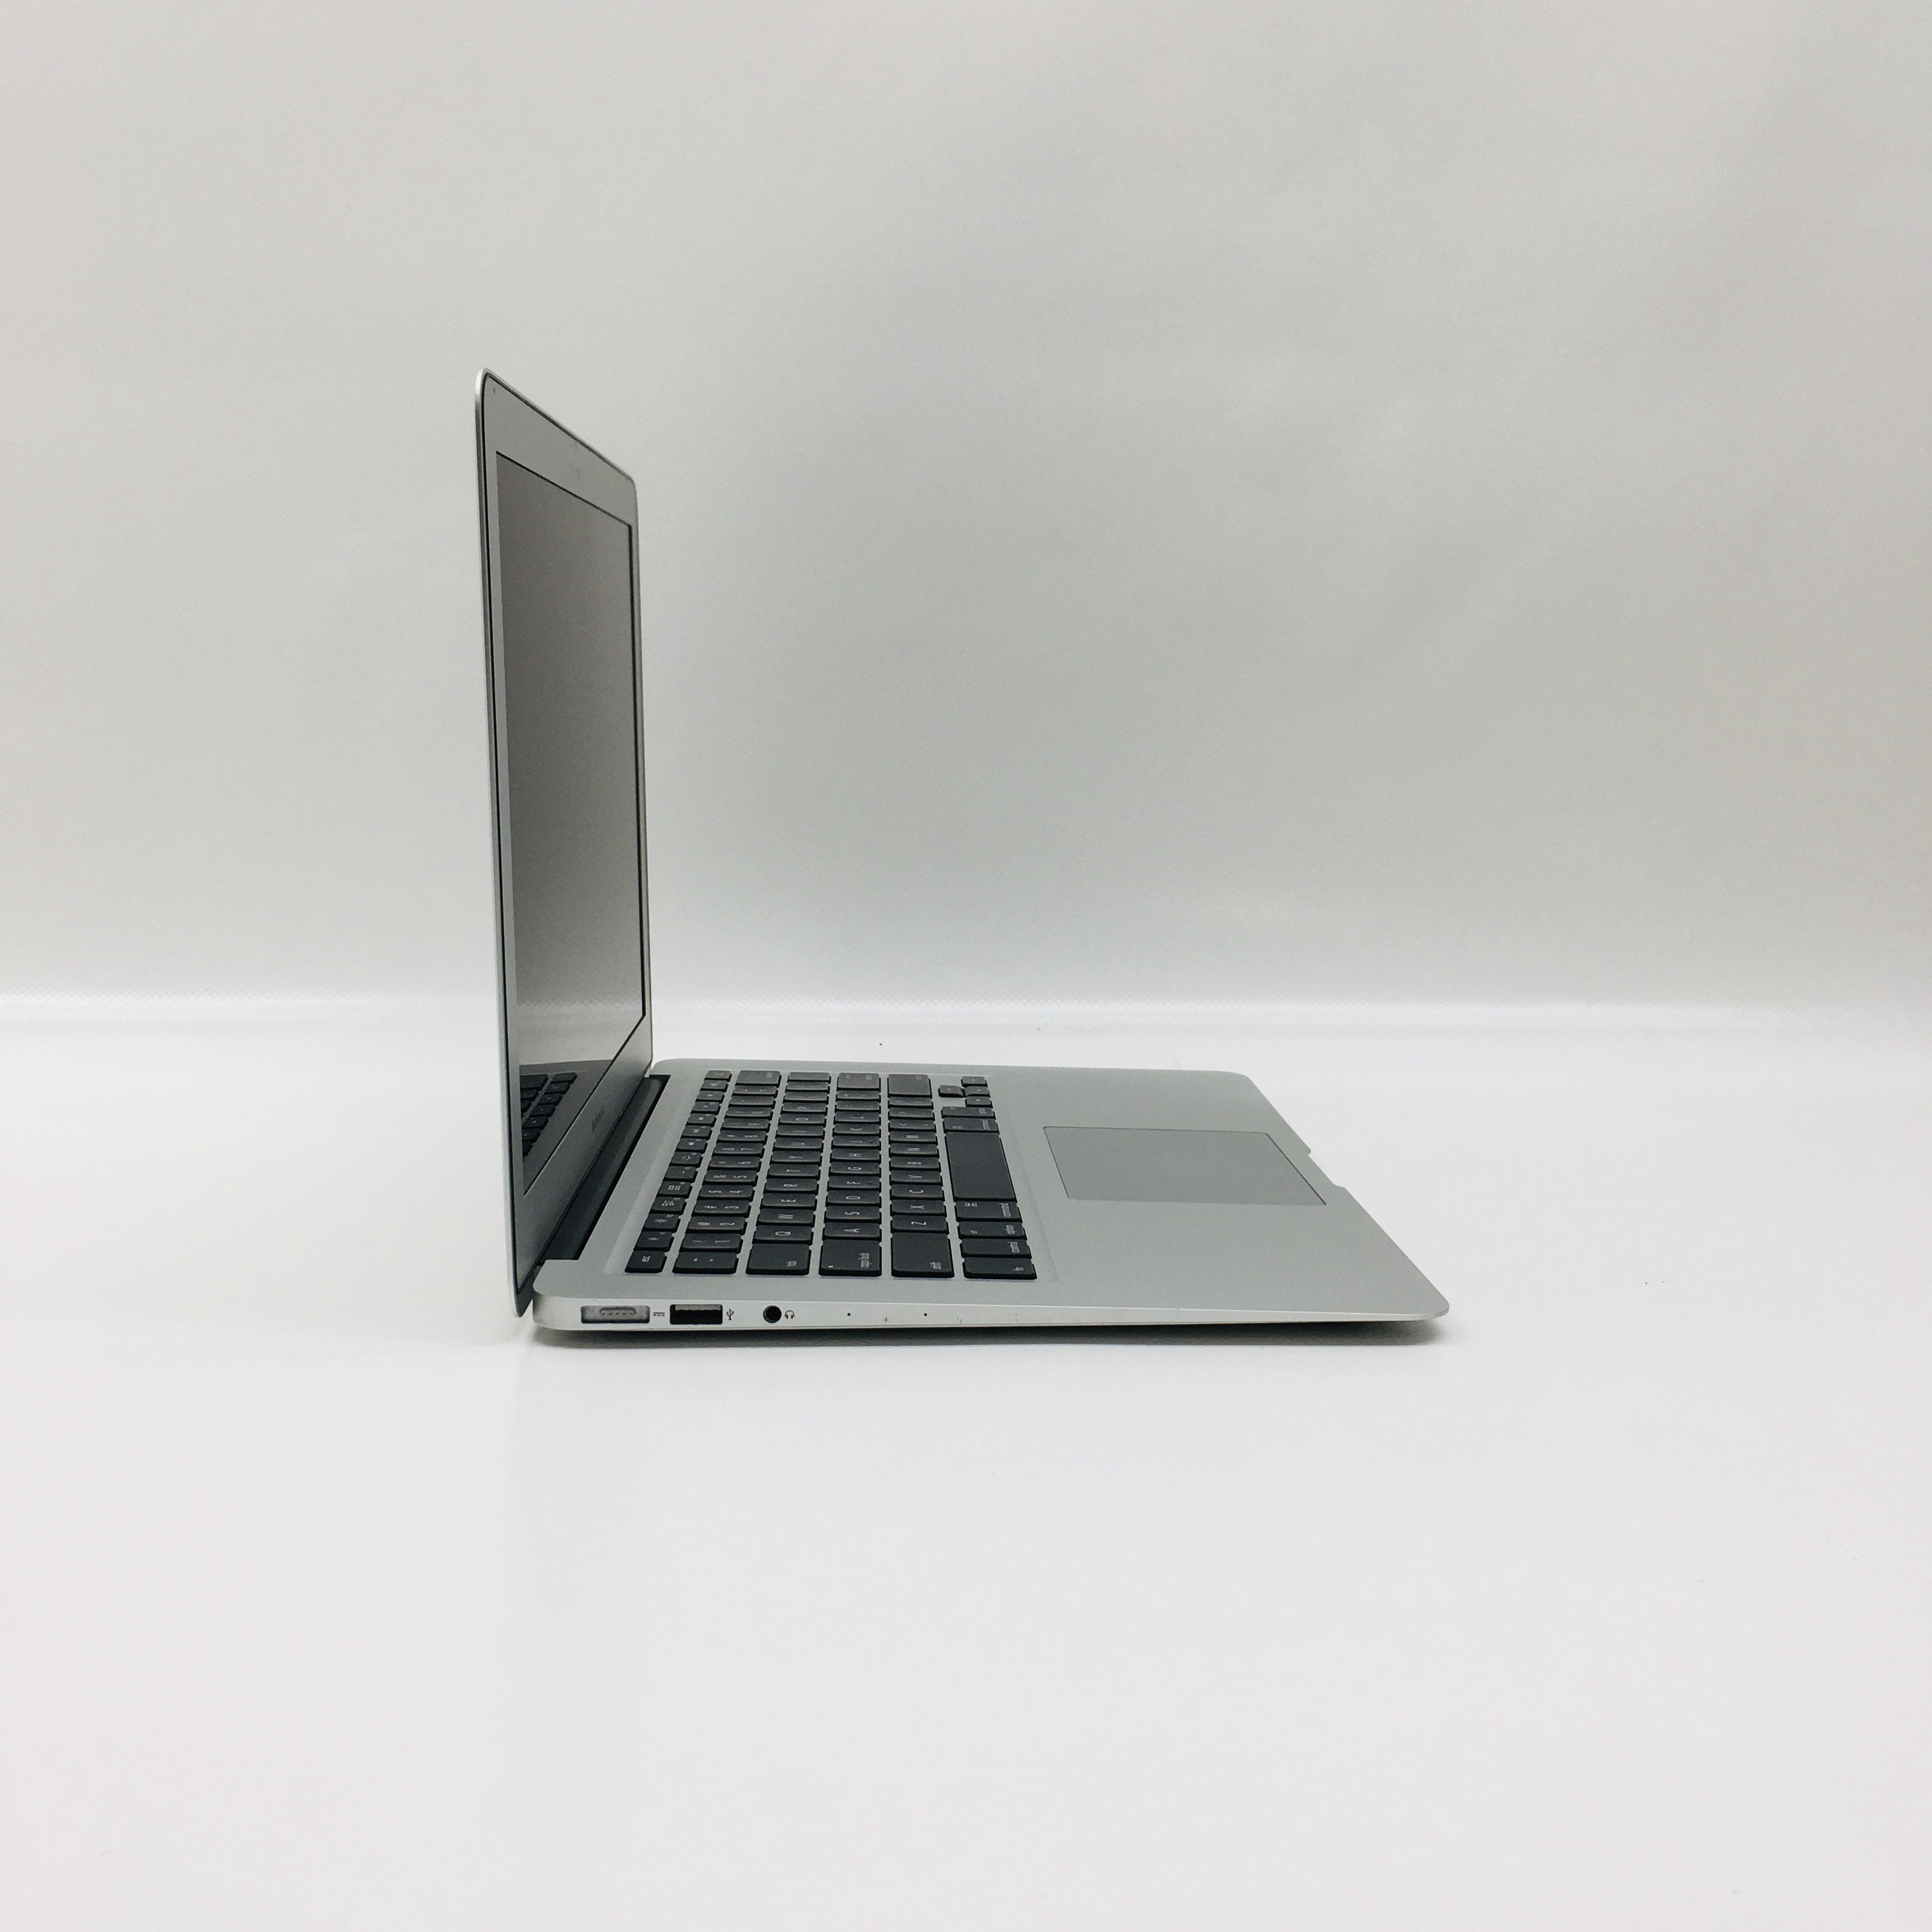 MacBook Air 13" Early 2015 (Intel Core i5 1.6 GHz 4 GB RAM 128 GB SSD), Intel Core i5 1.6 GHz, 4 GB RAM, 128 GB SSD, image 2